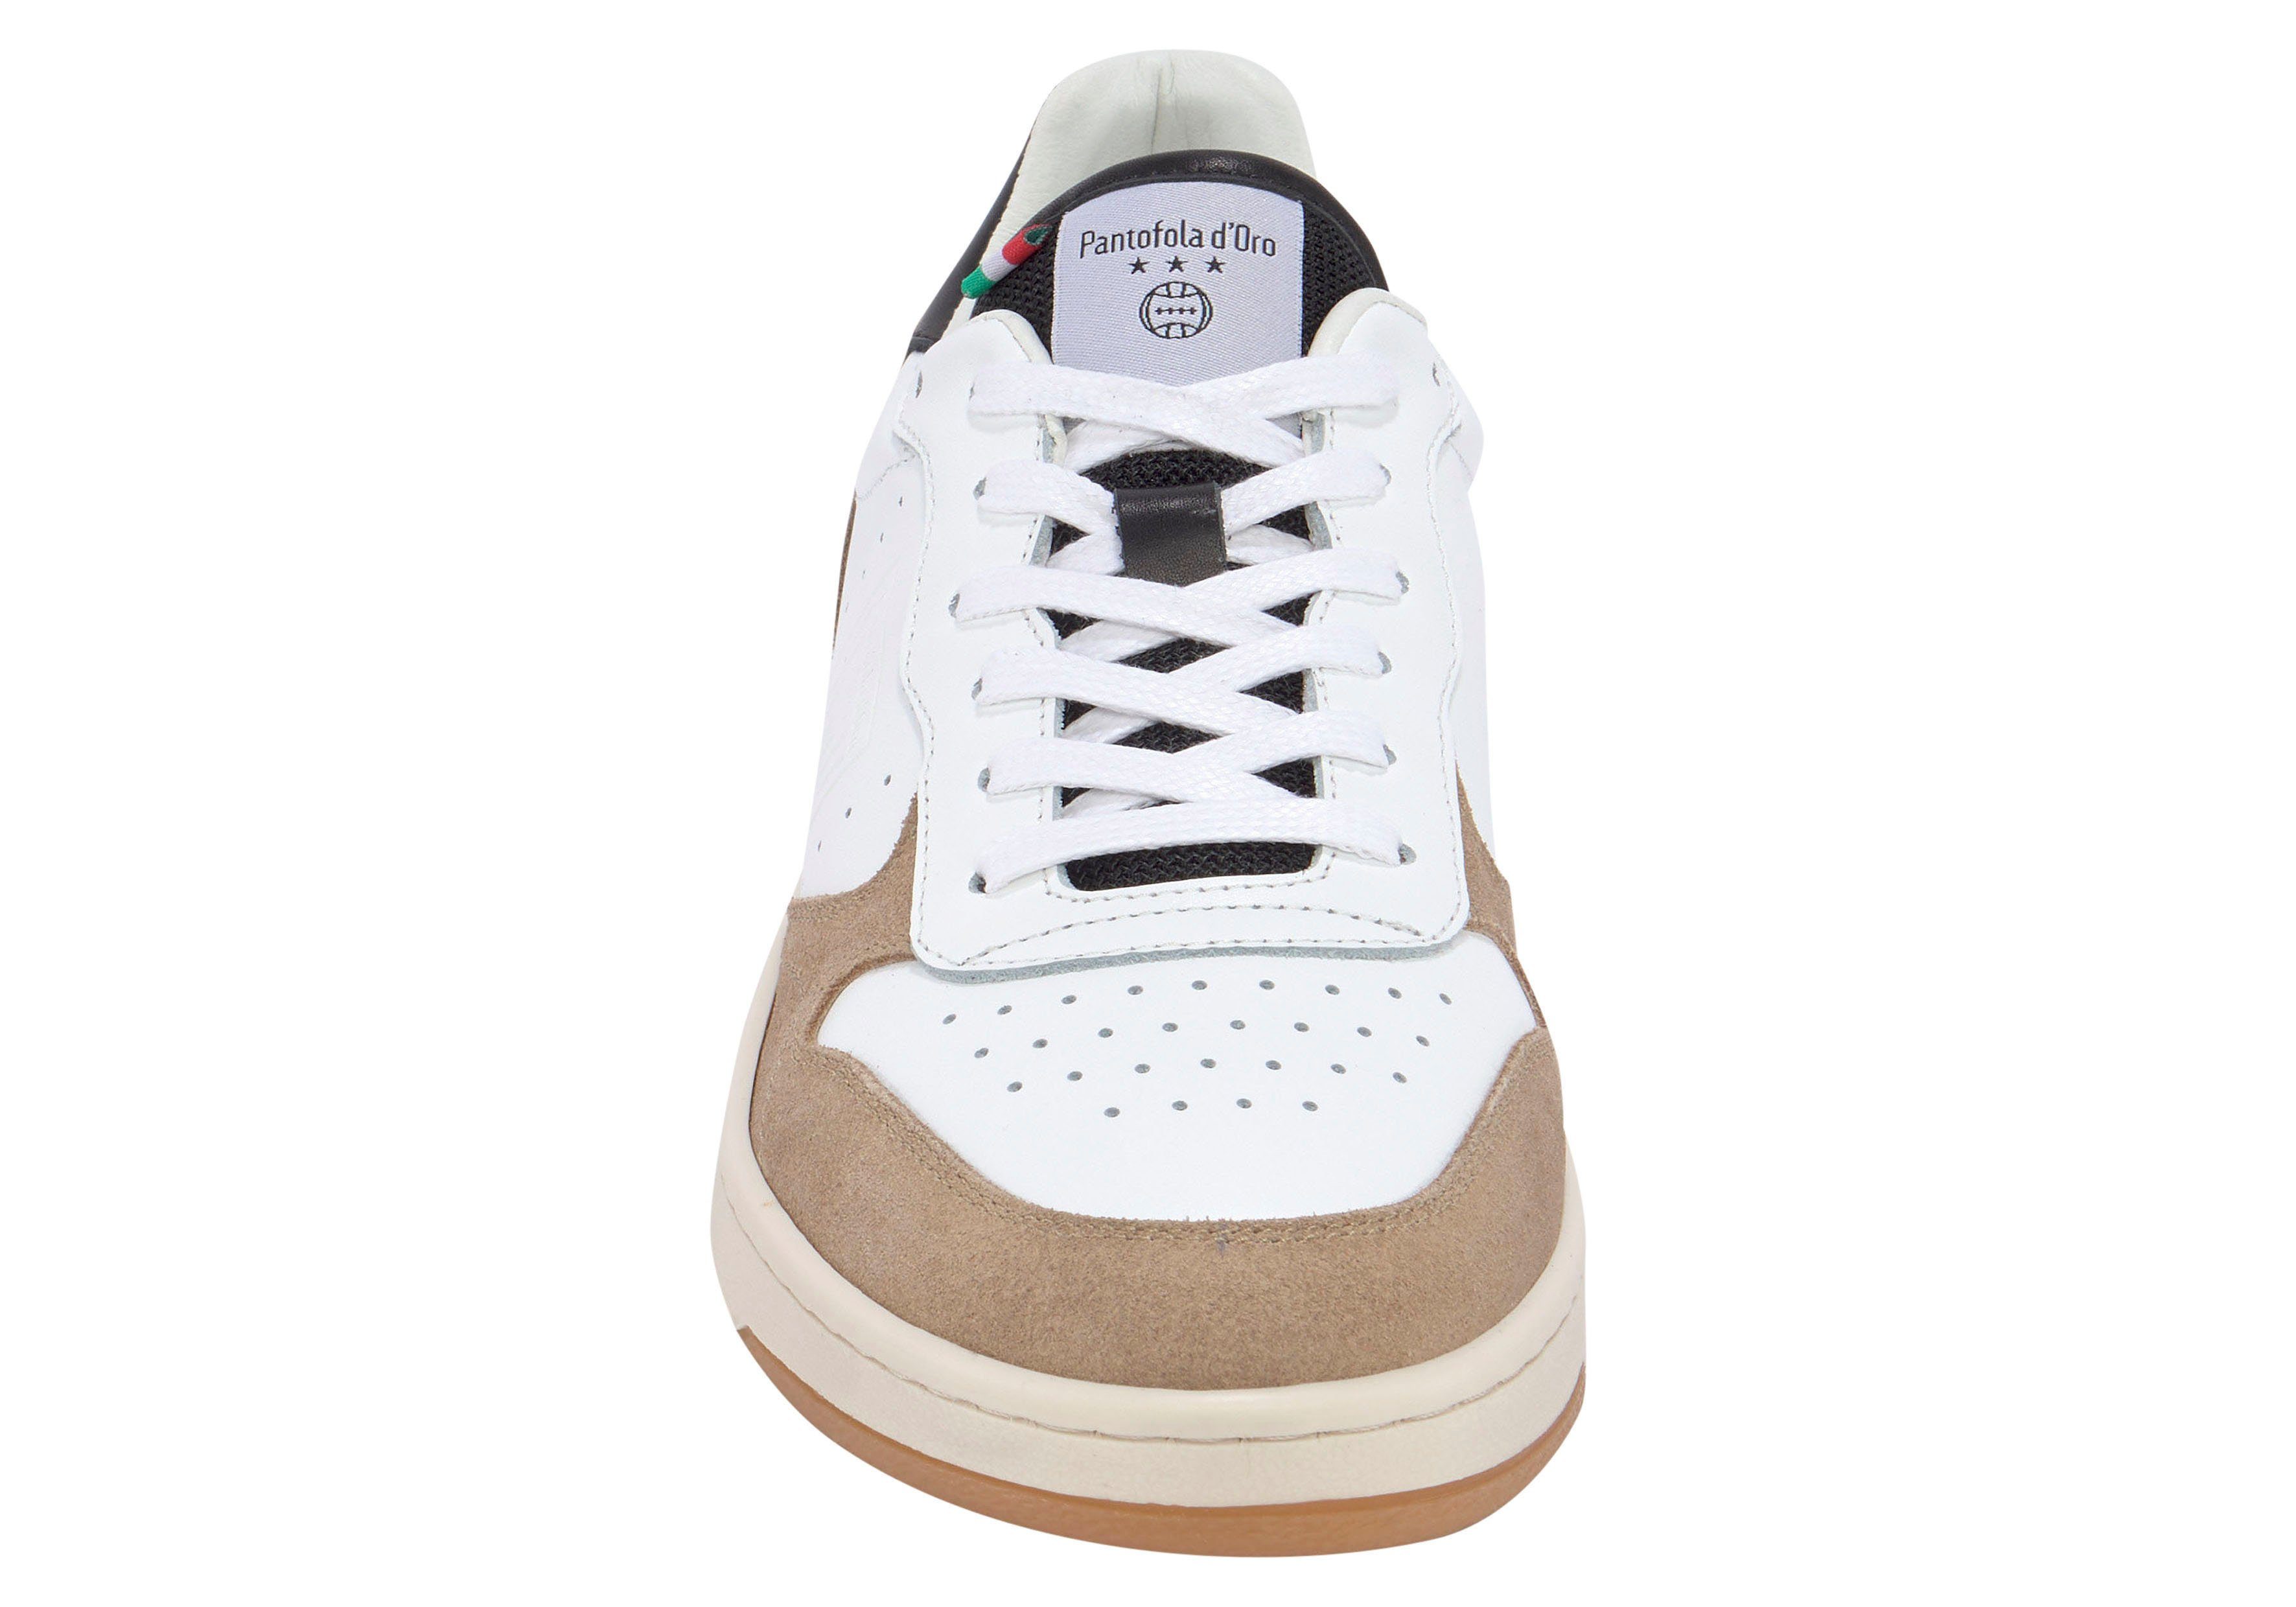 Look Business UOMO Sneaker im Pantofola Casual d´Oro LOW weiß-beige LIONI